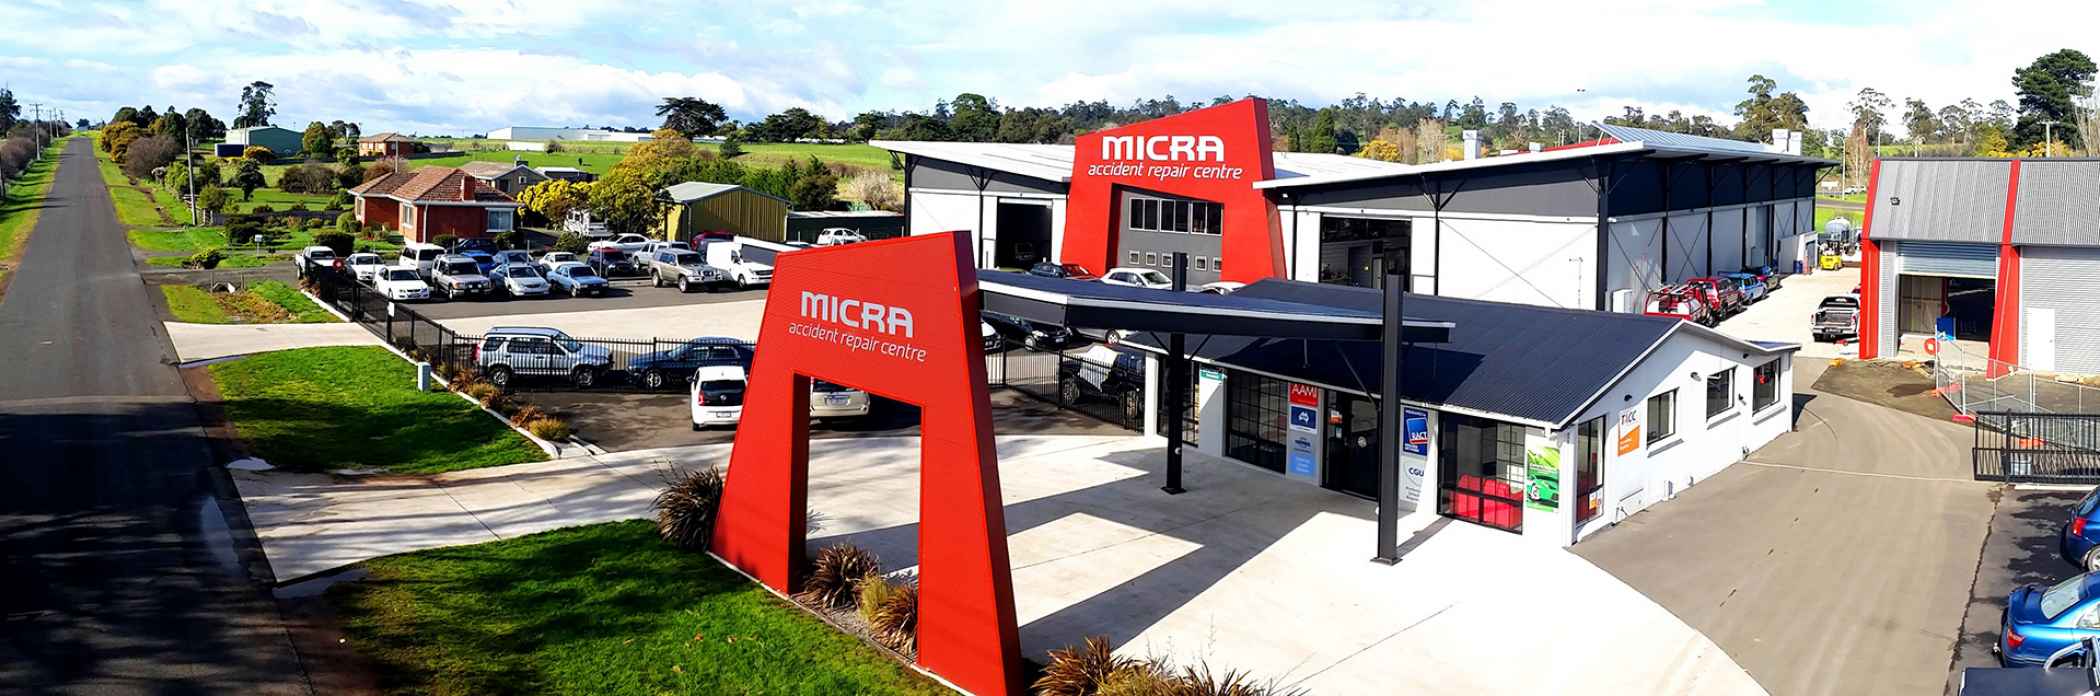 Micra Buildings